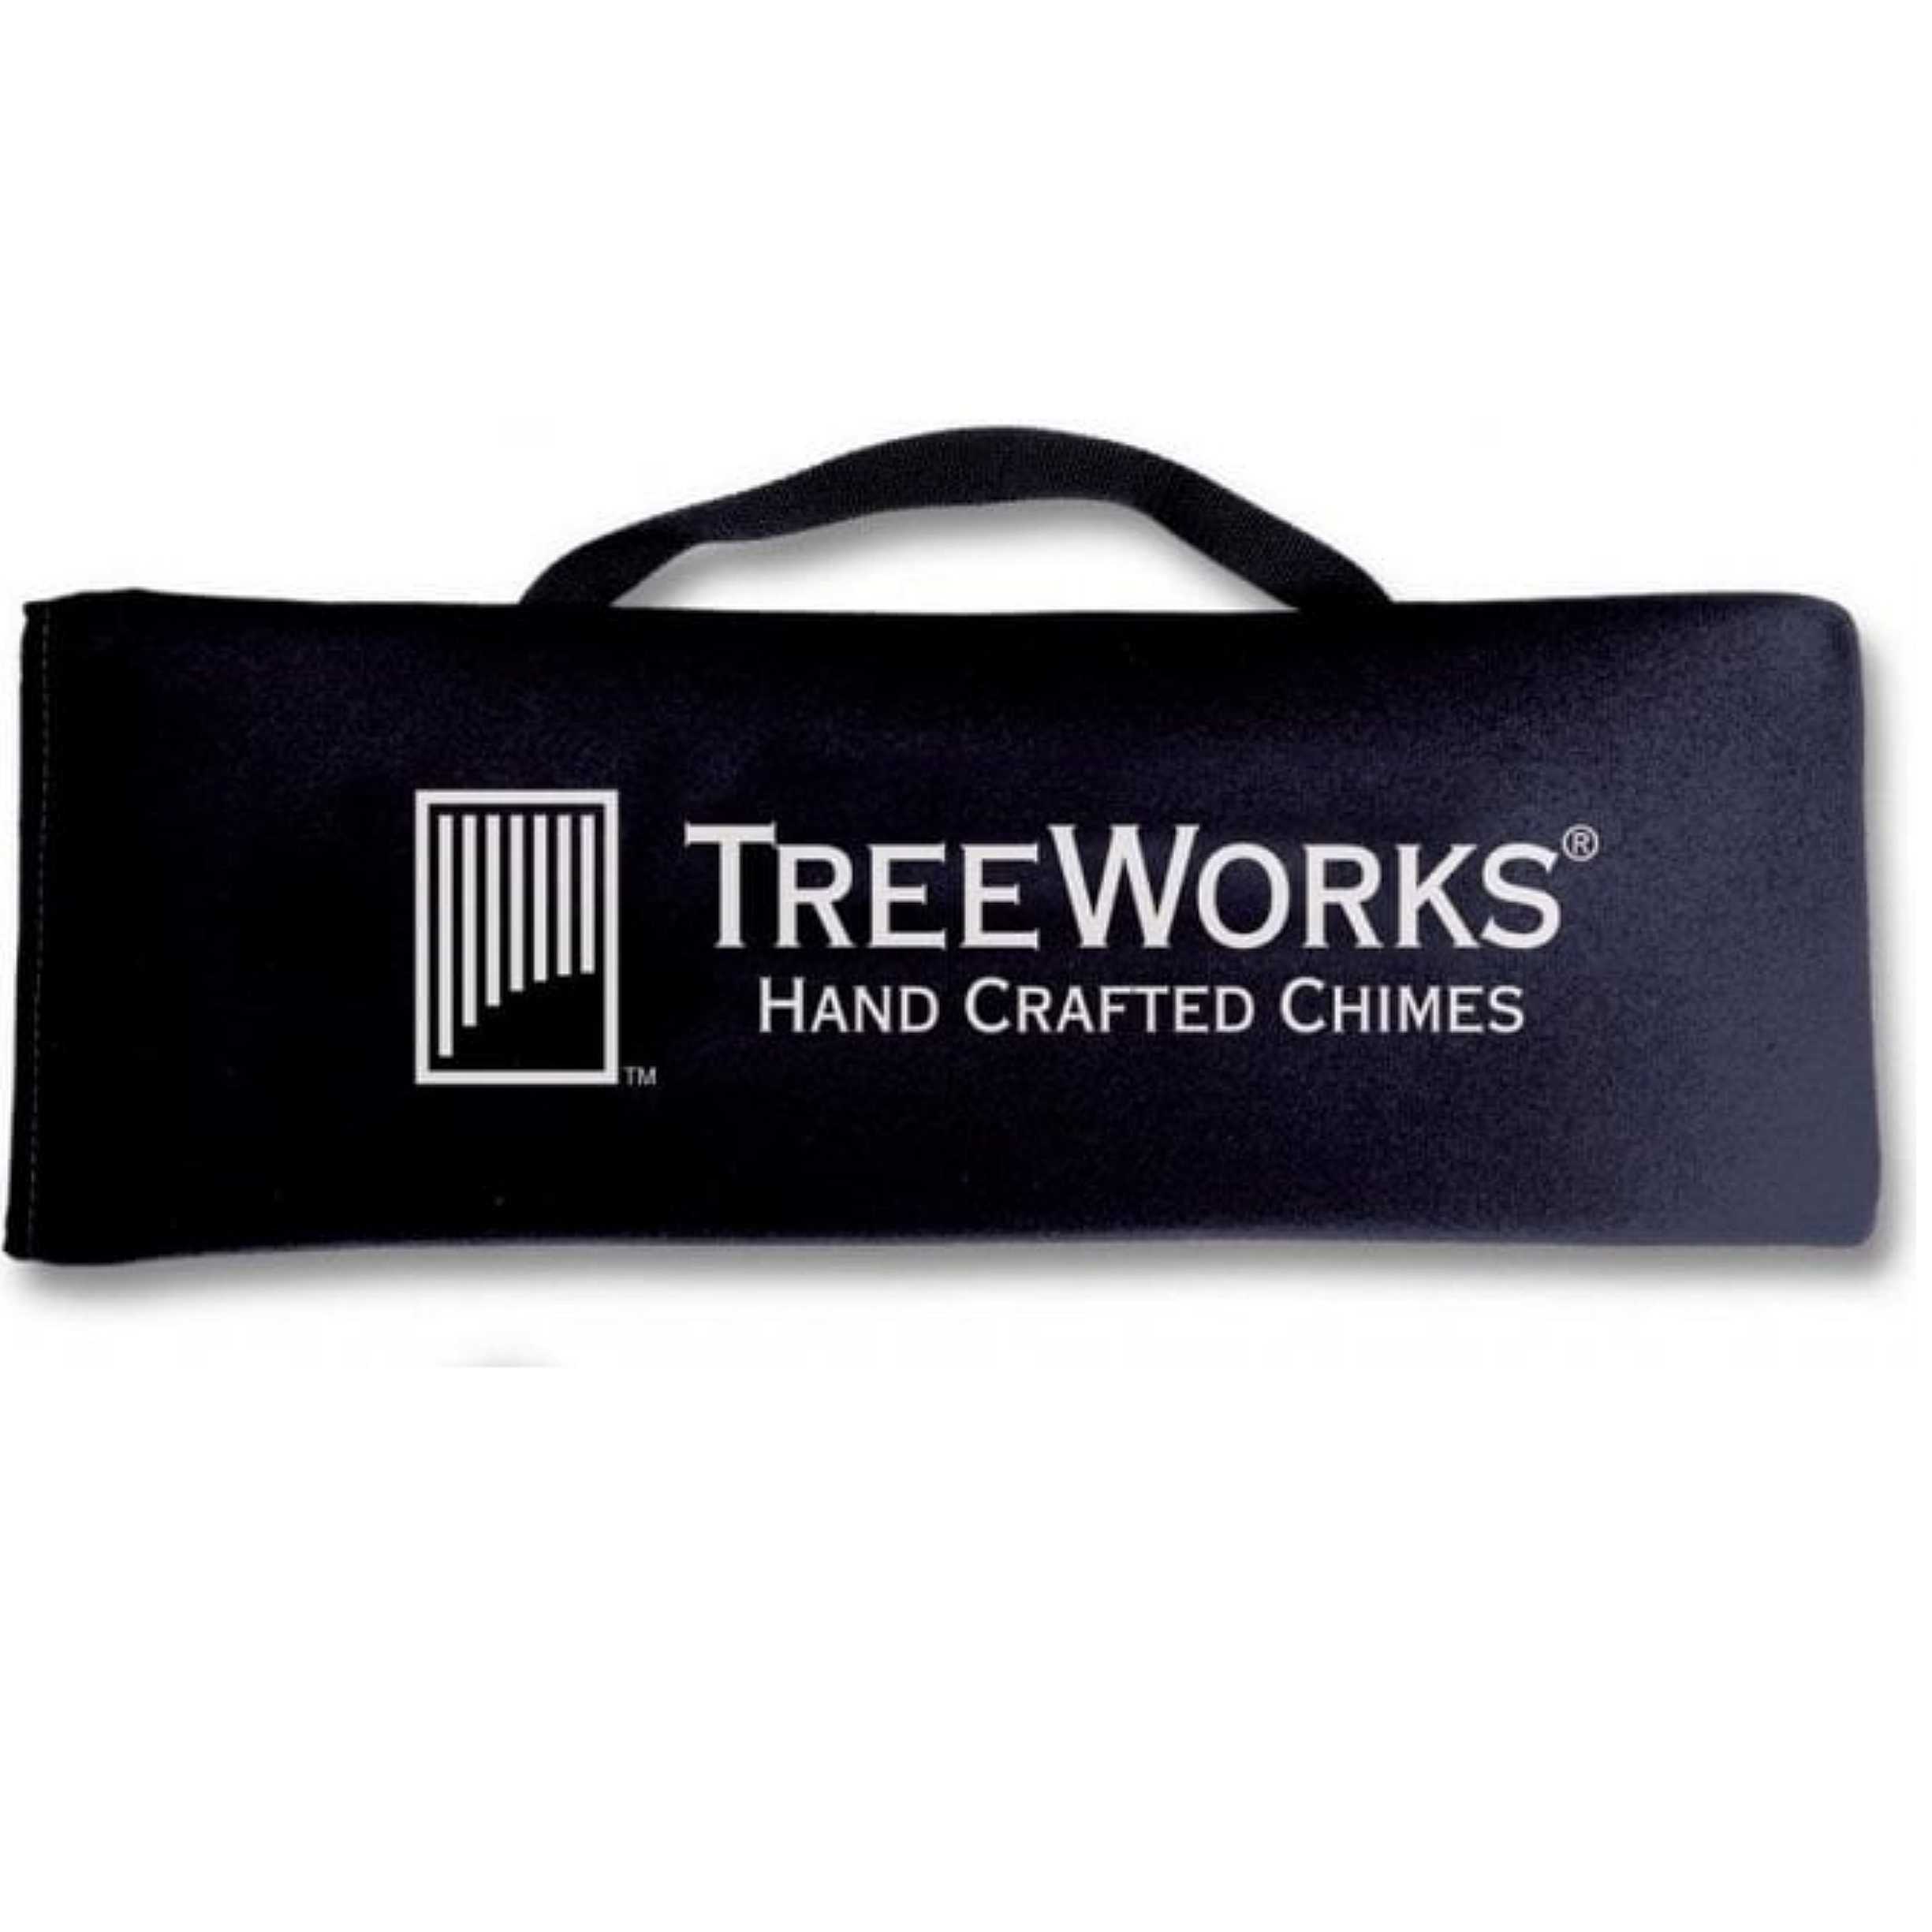 TreeWorks Chime Case (for TRE44 or TRE23)